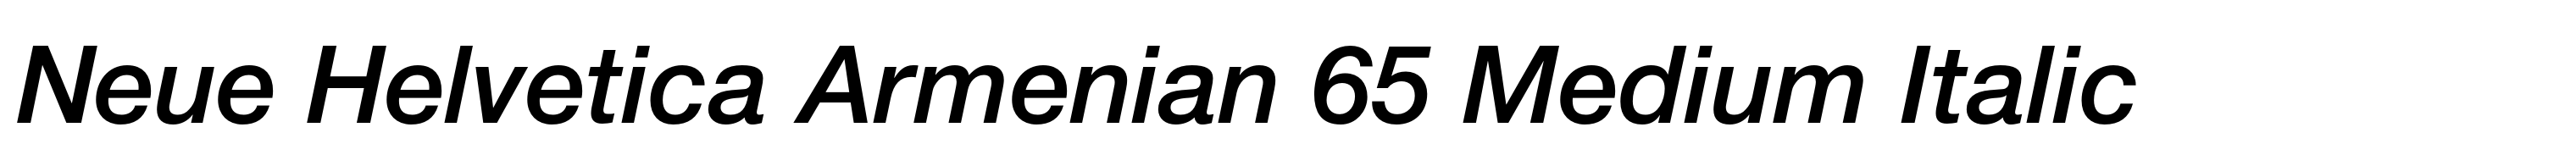 Neue Helvetica Armenian 65 Medium Italic